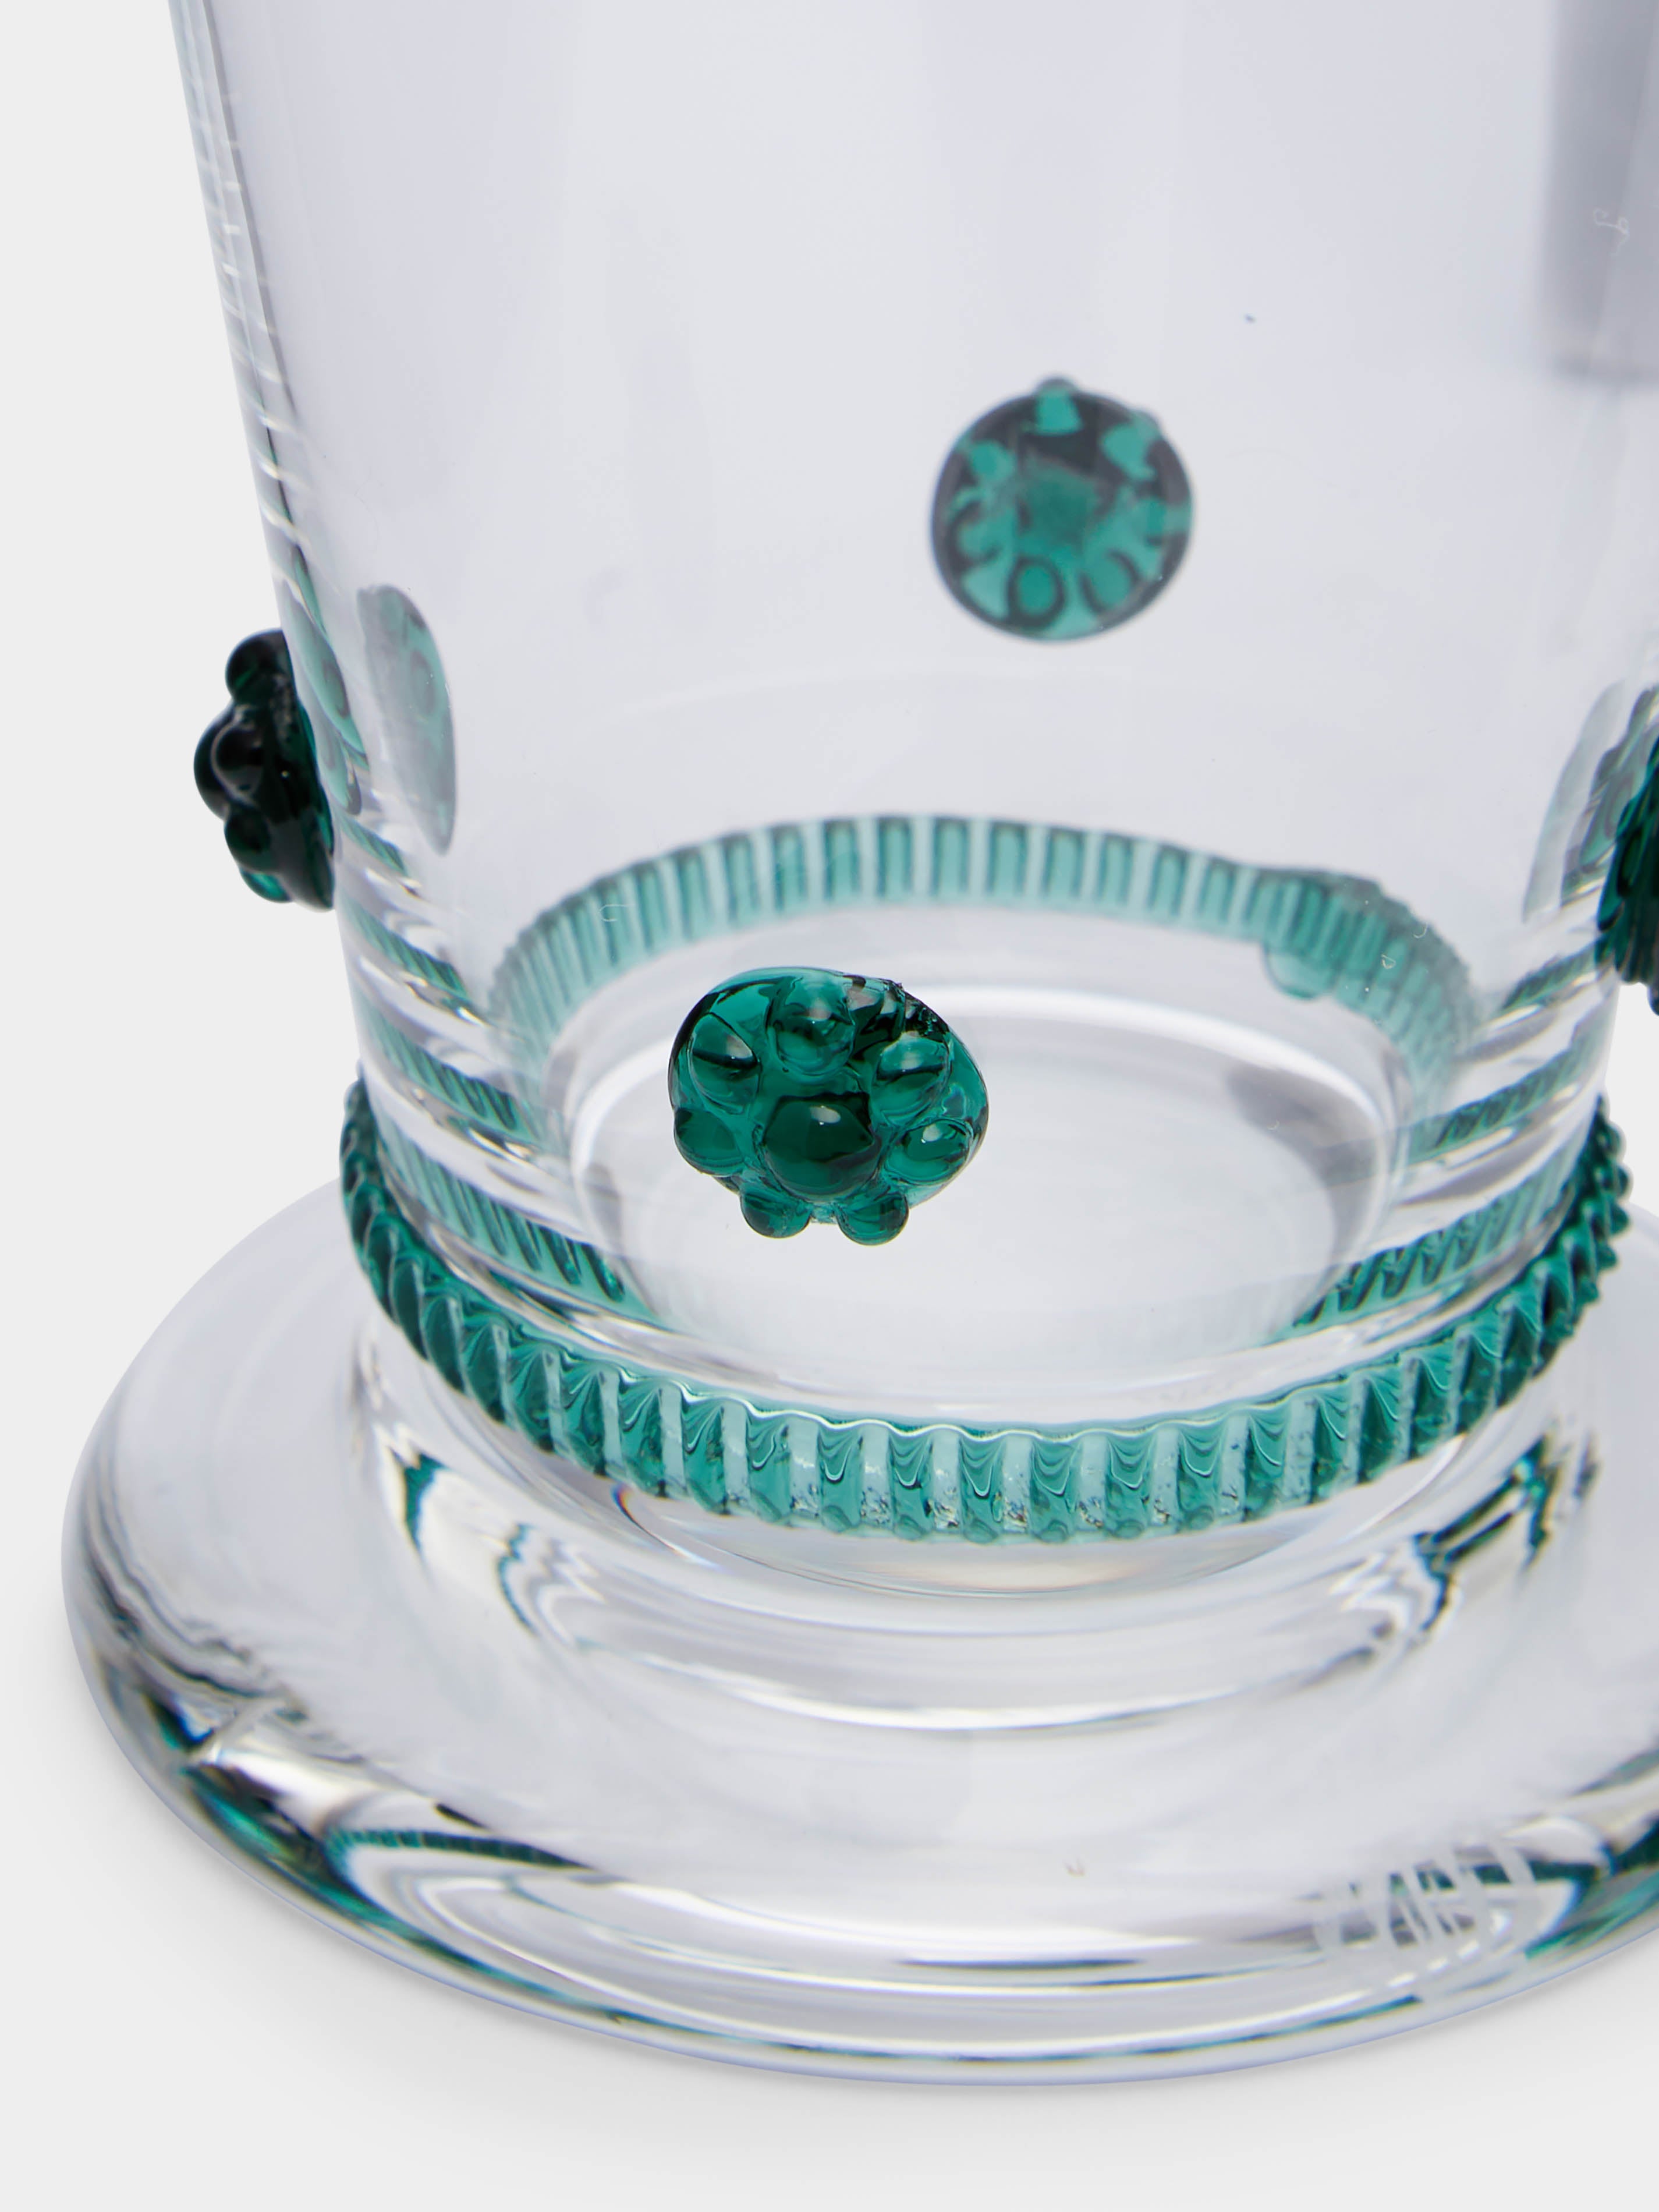 Bacchus Romanian Crystal White Wine Glasses, Set of 4 - Stemware - Drinkware